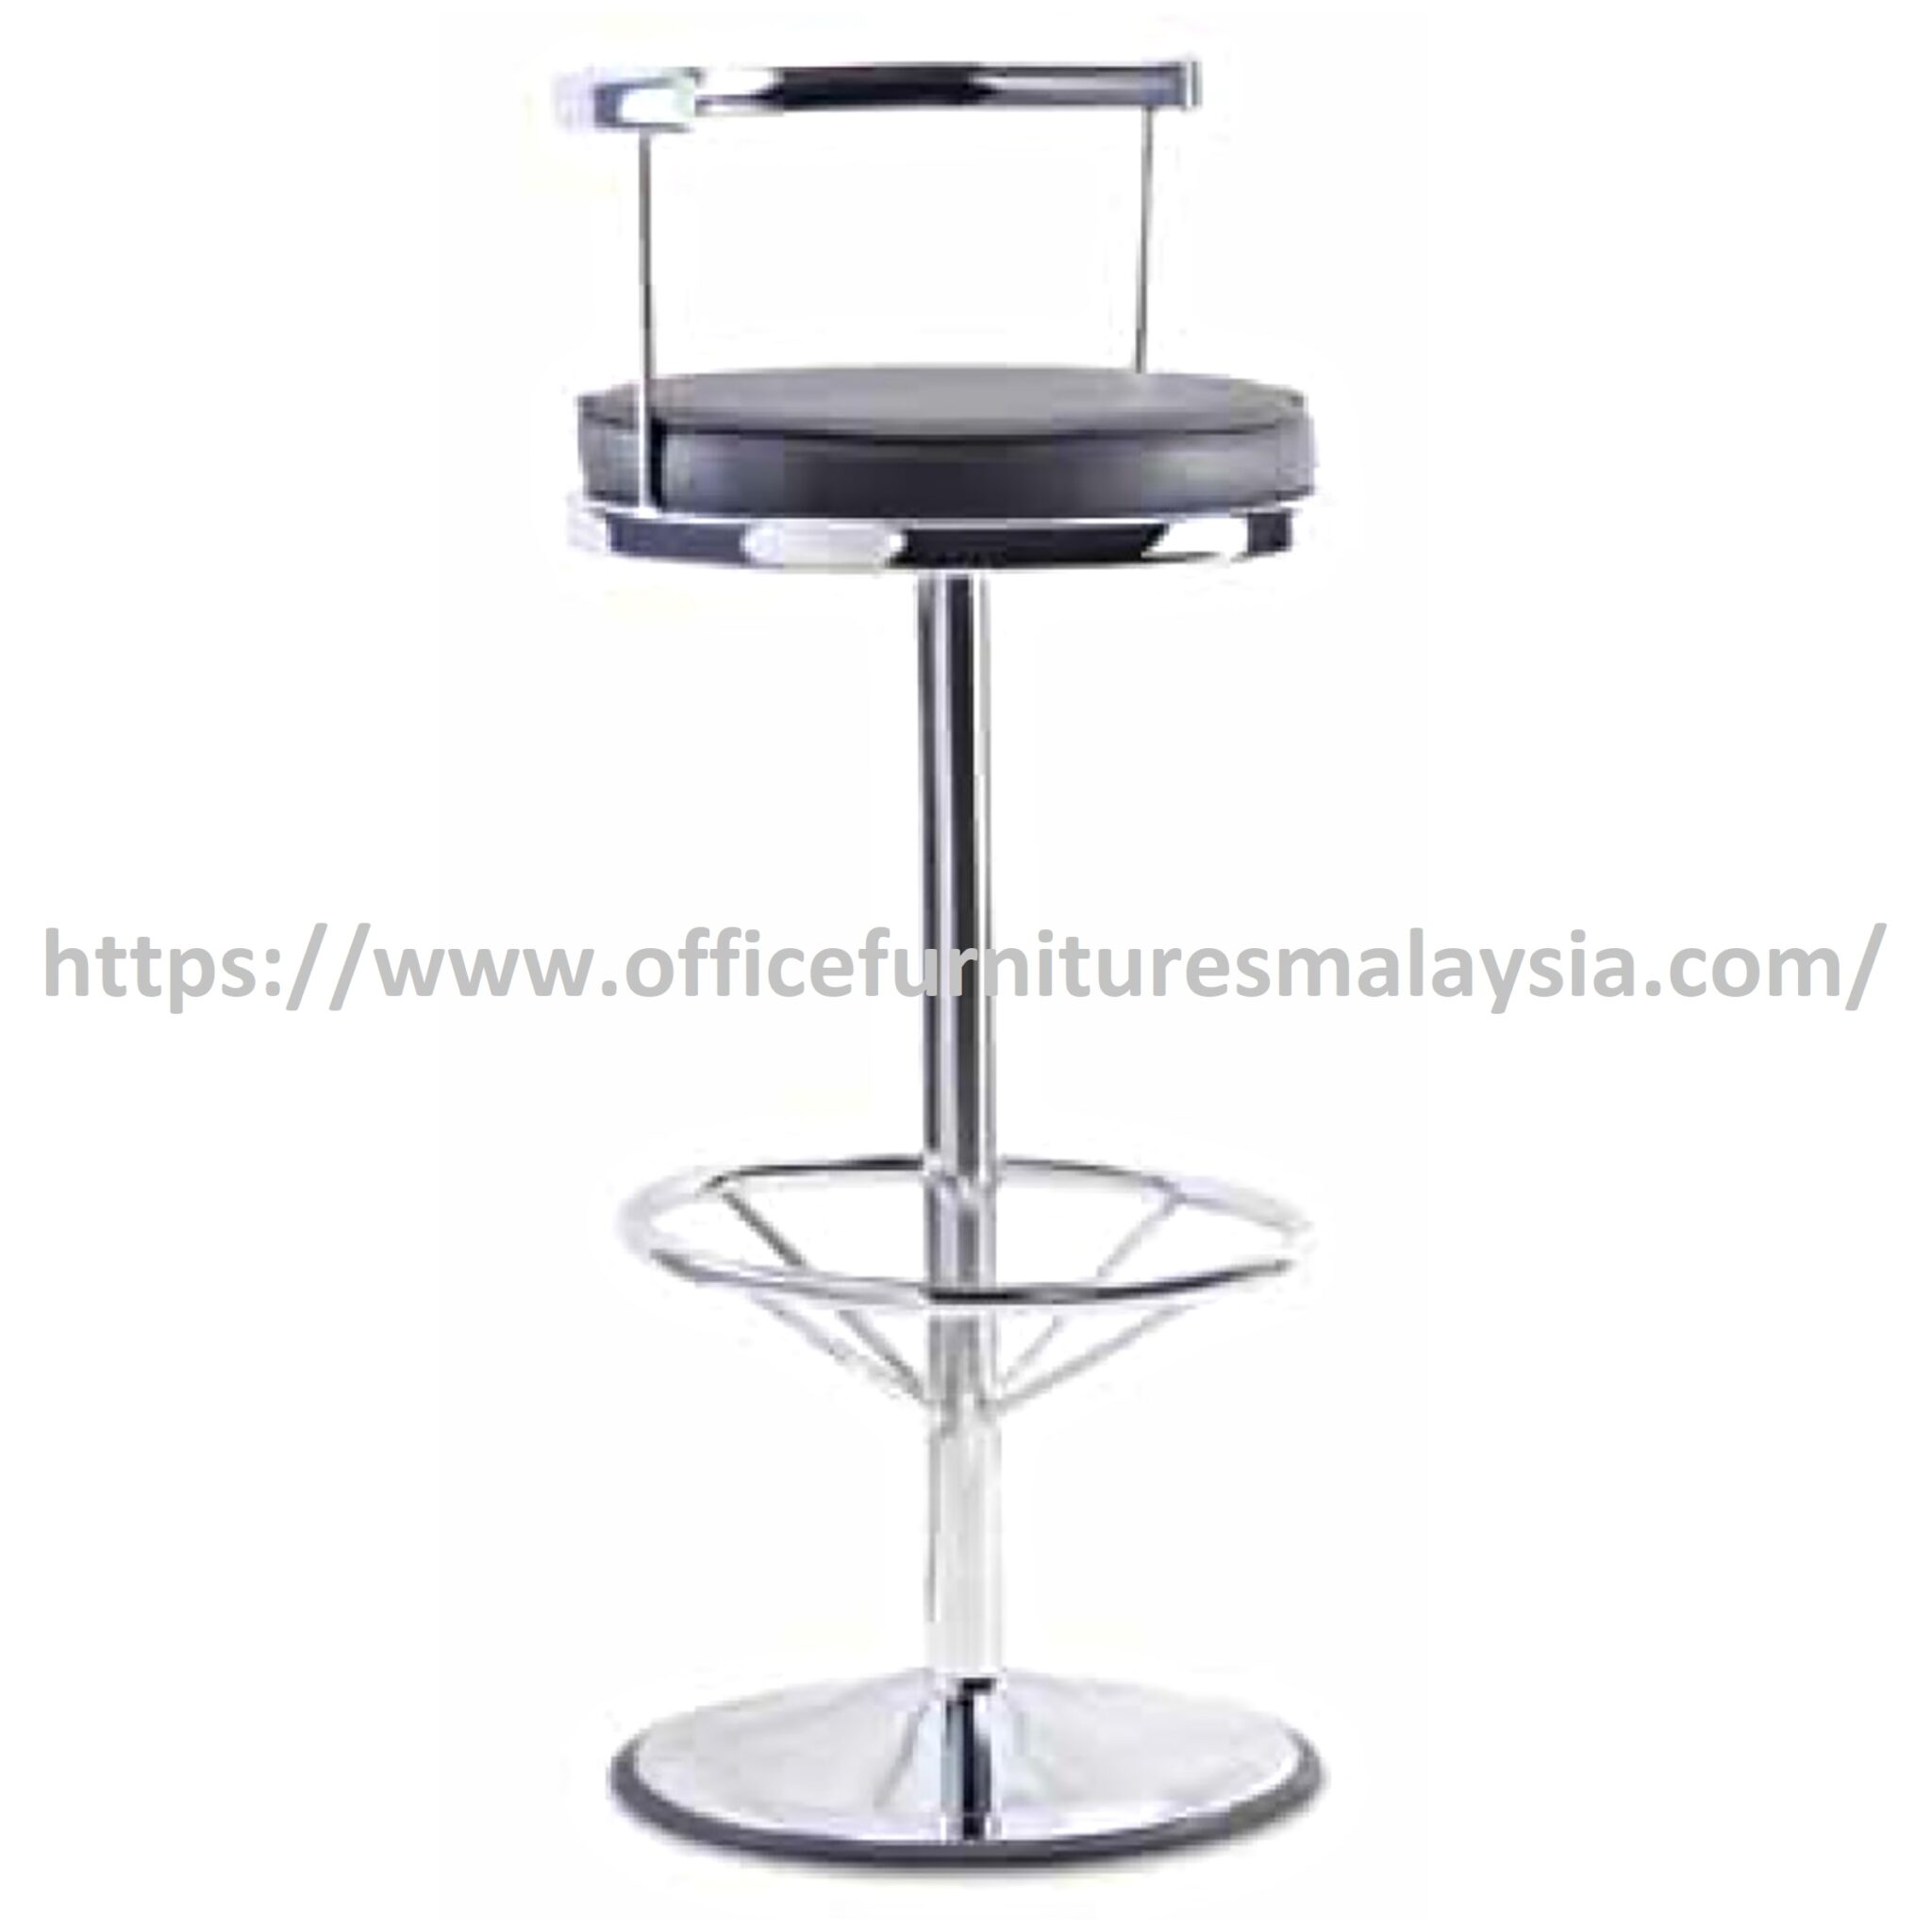 Restaurant Height Bar Tools ZDESB83 | Office Furnitures Malaysia